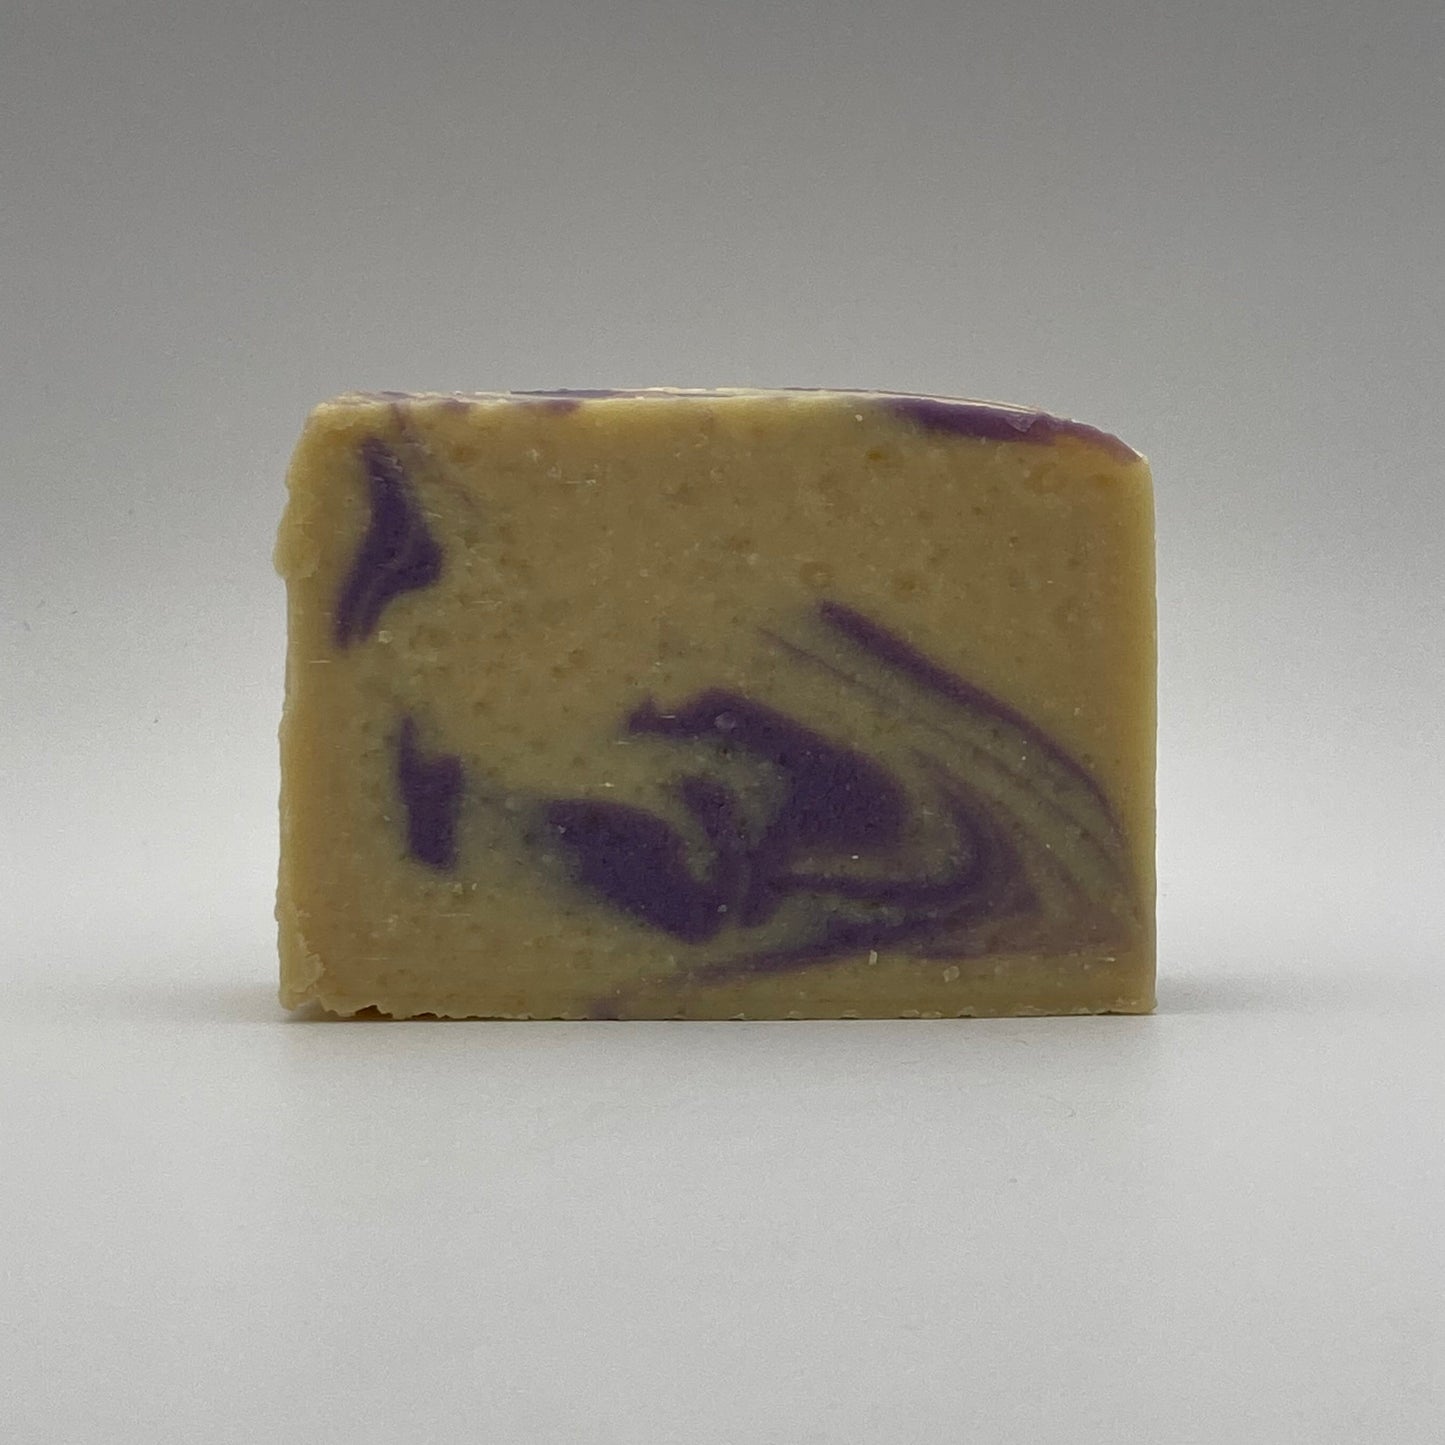 The Lavender Goat Milk Soap Bar